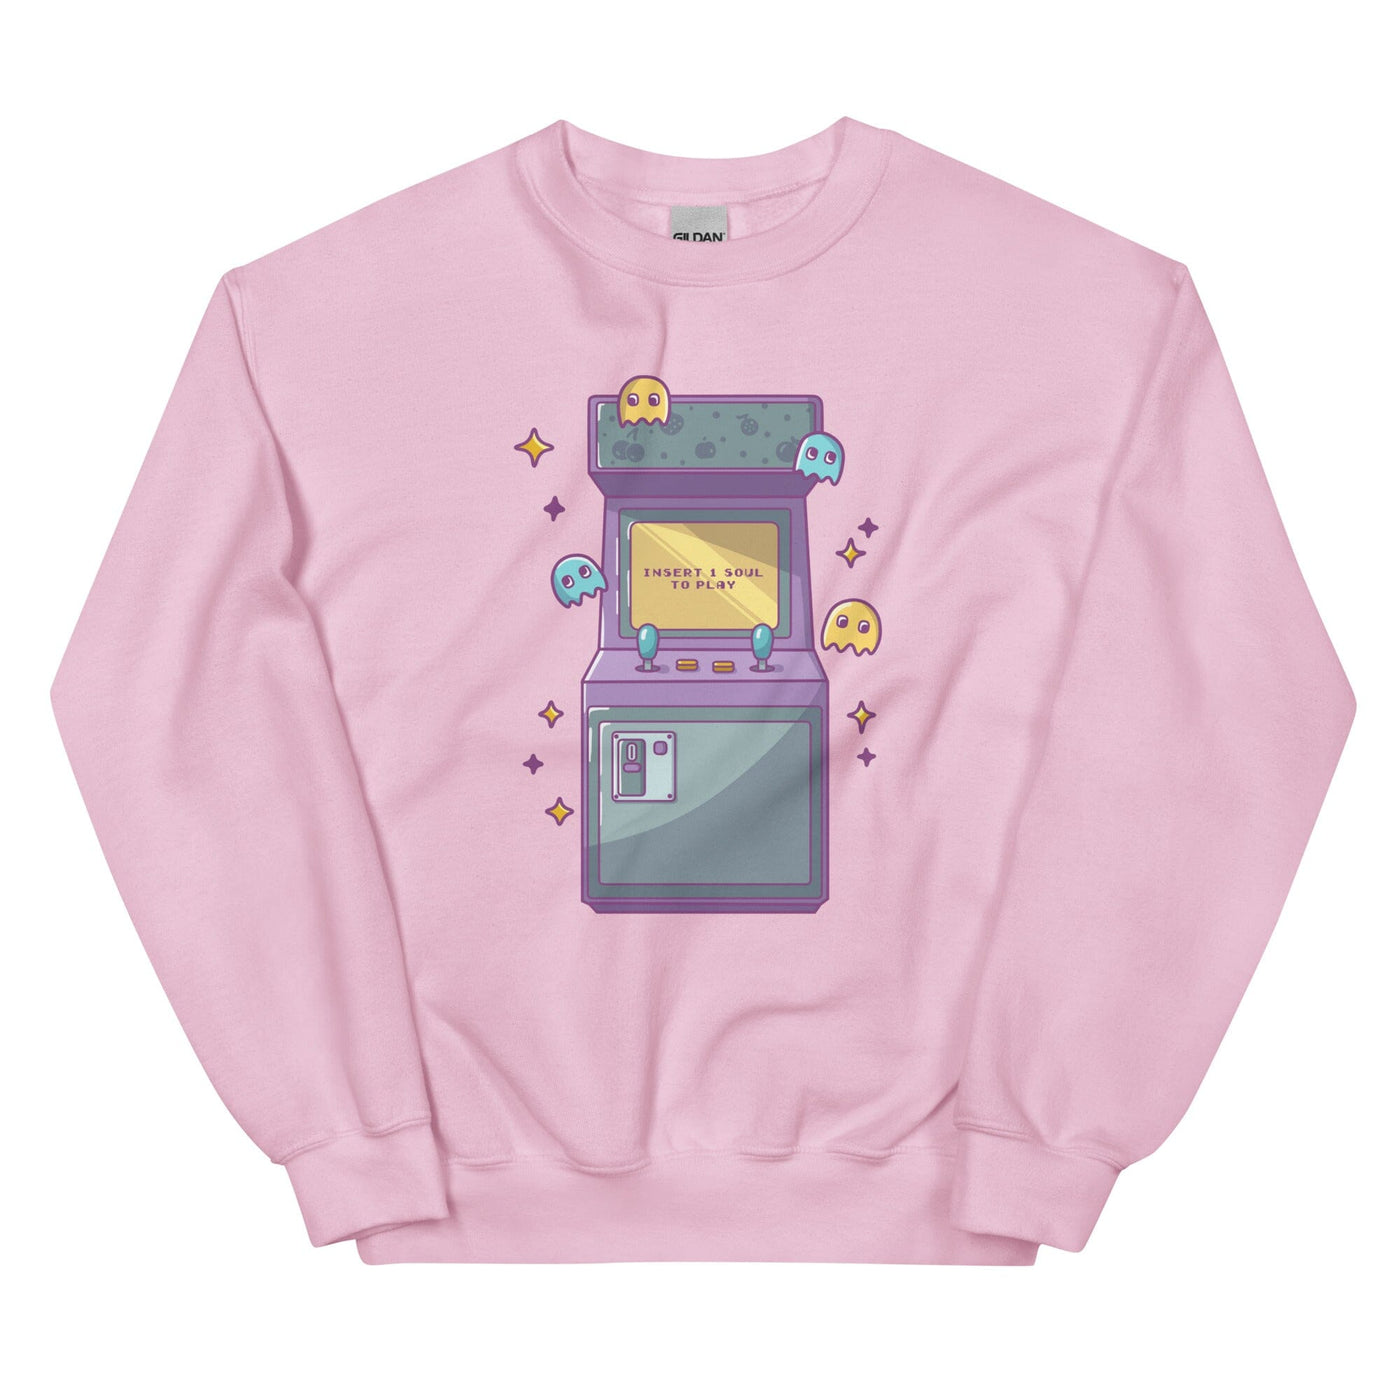 Insert 1 Soul to Play | Unisex Sweatshirt | Retro Gamer Threads & Thistles Inventory Light Pink S 